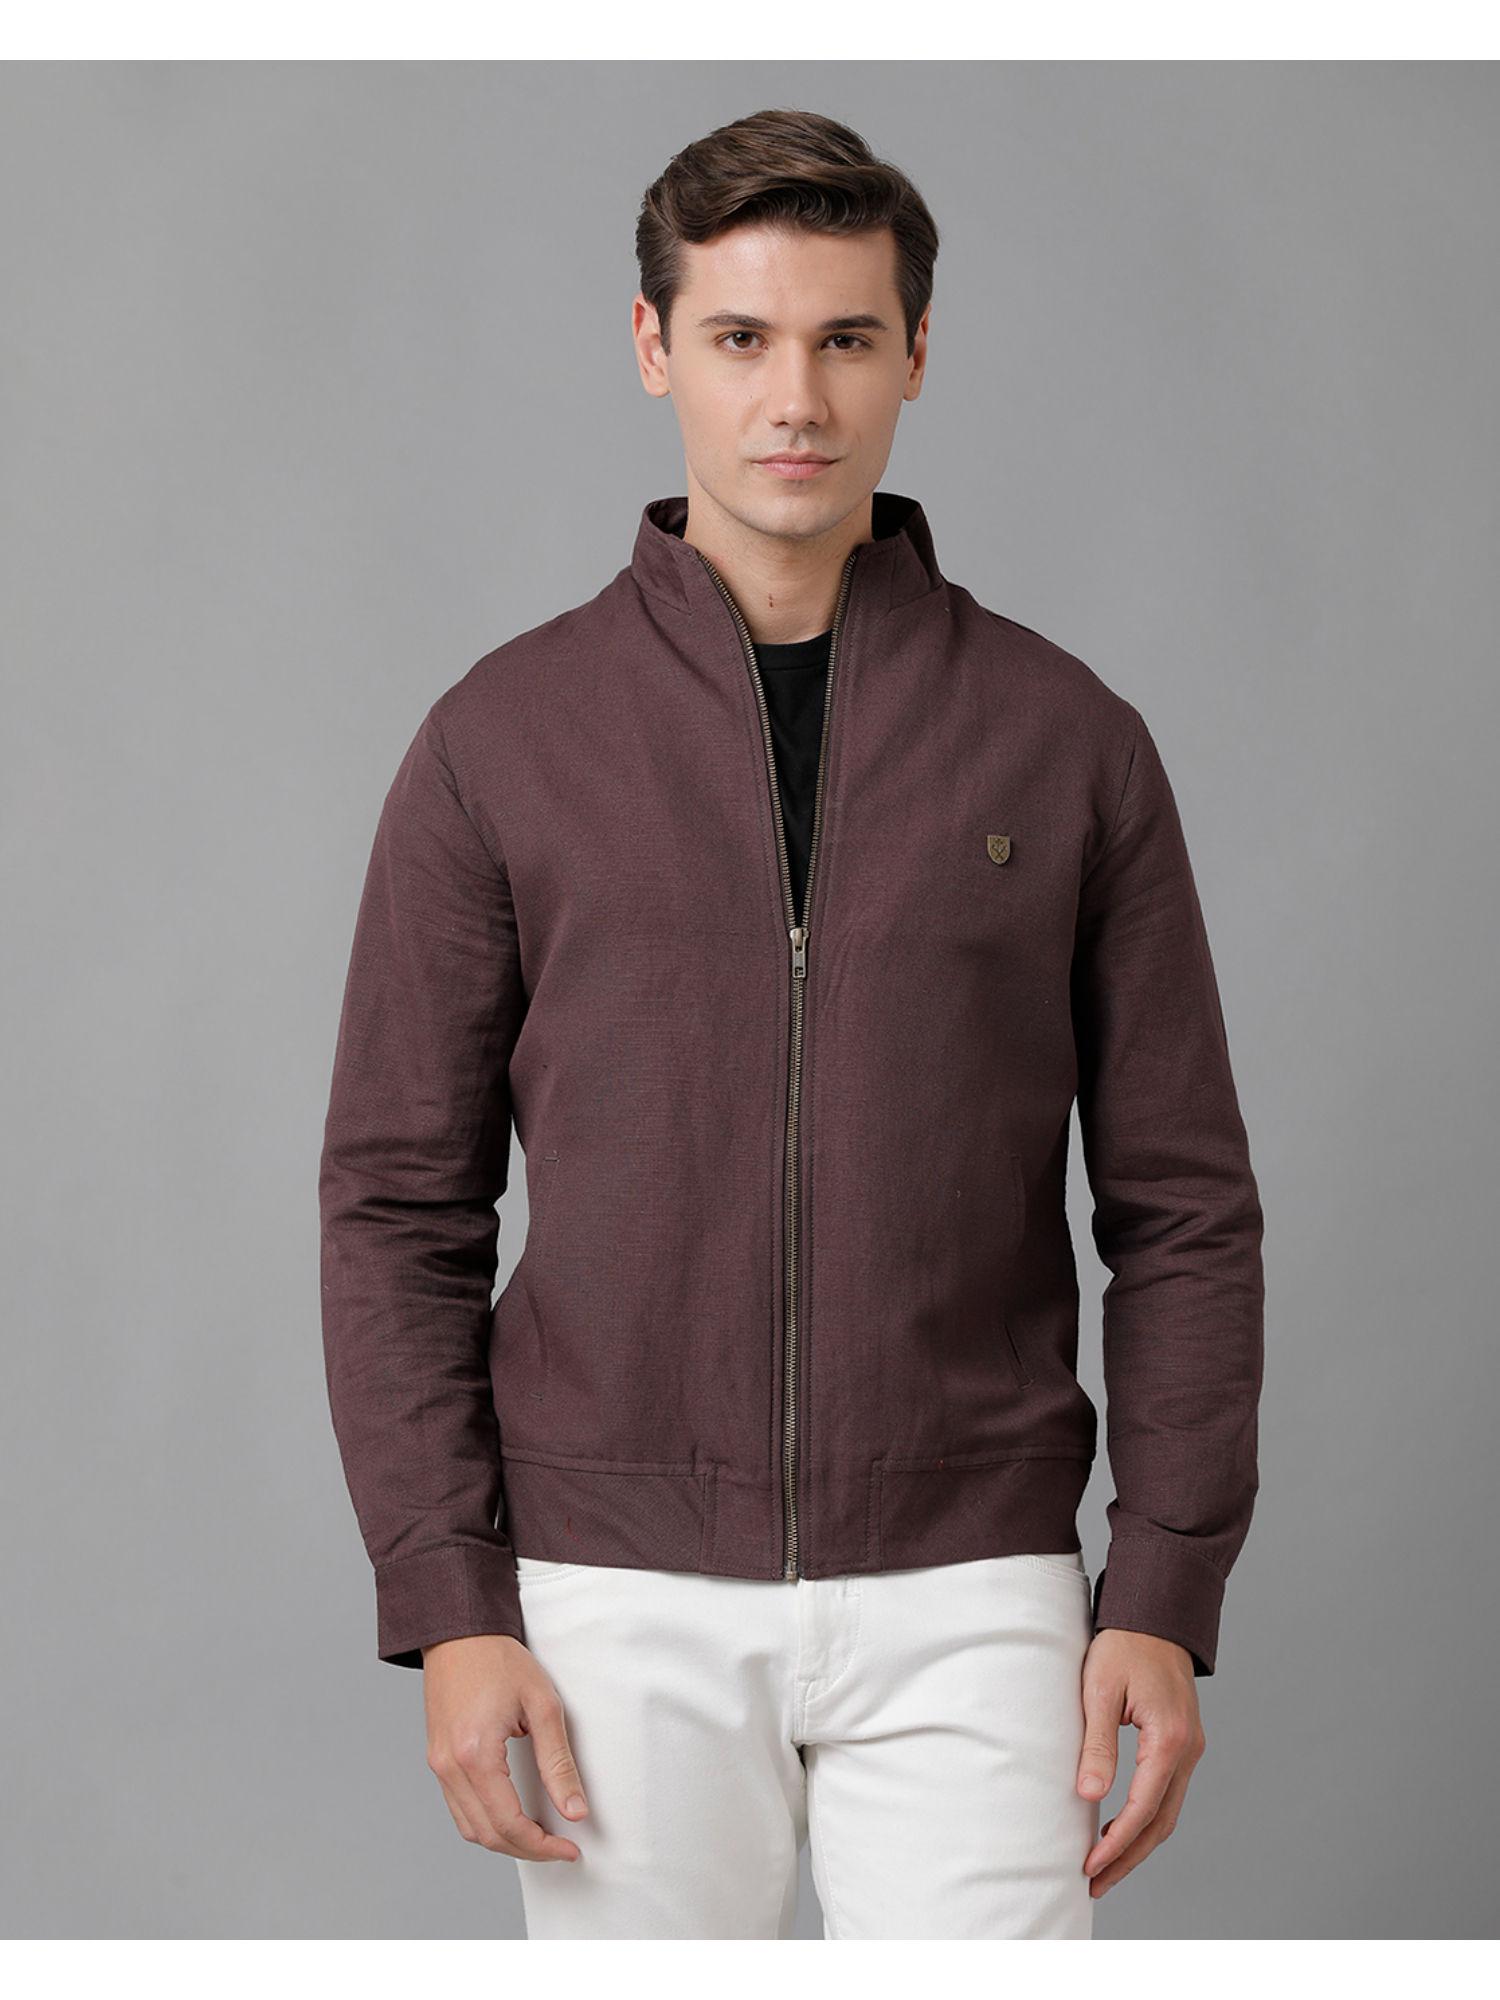 men's linen natural / brown solid casual jacket